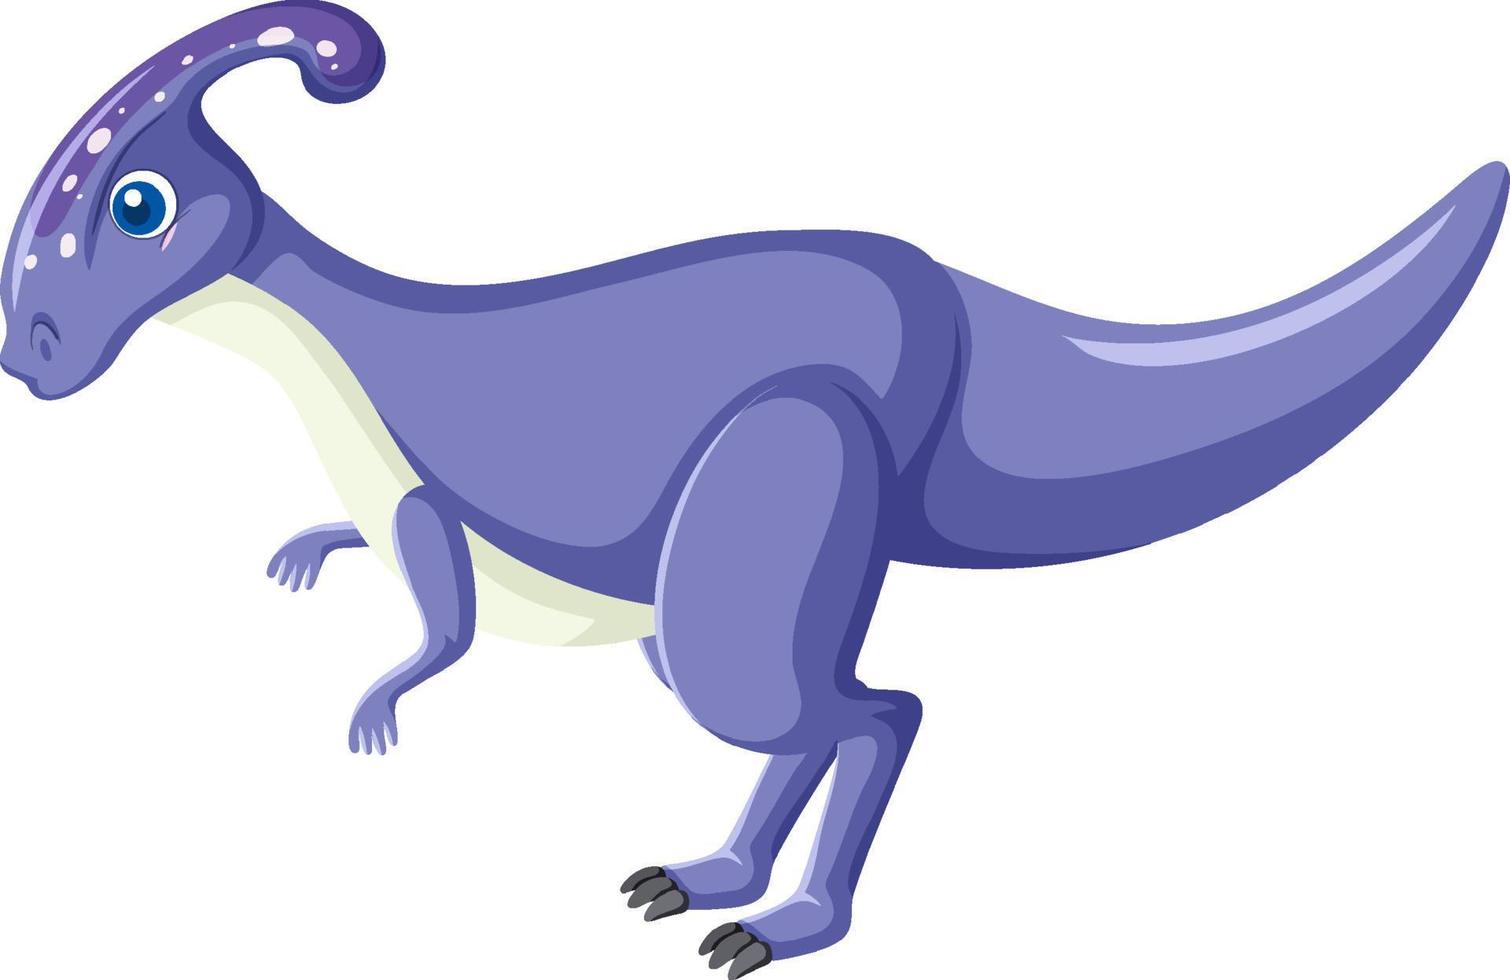 Cute Parasaurolophus Dinosaur Cartoon vector